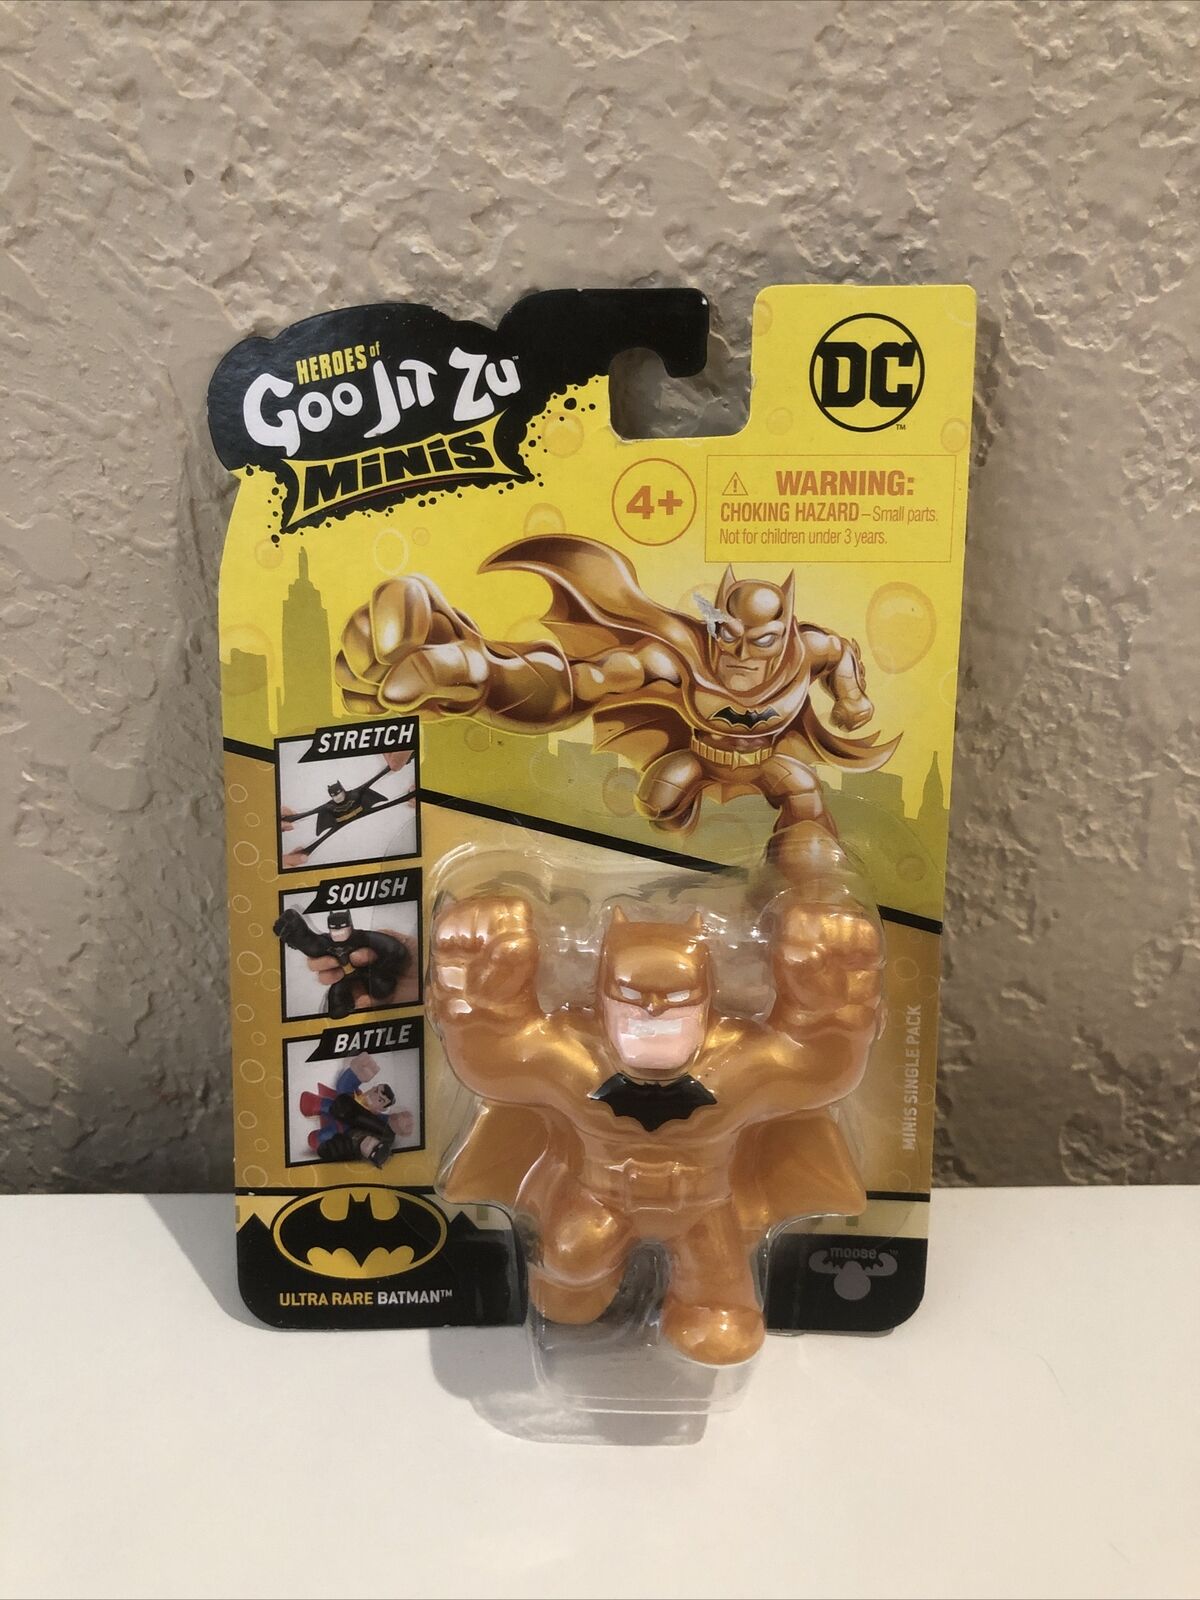 Heroes of Goo Jit Zu Minis DC ULTRA RARE BATMAN GOLD Mini Figure Sealed 